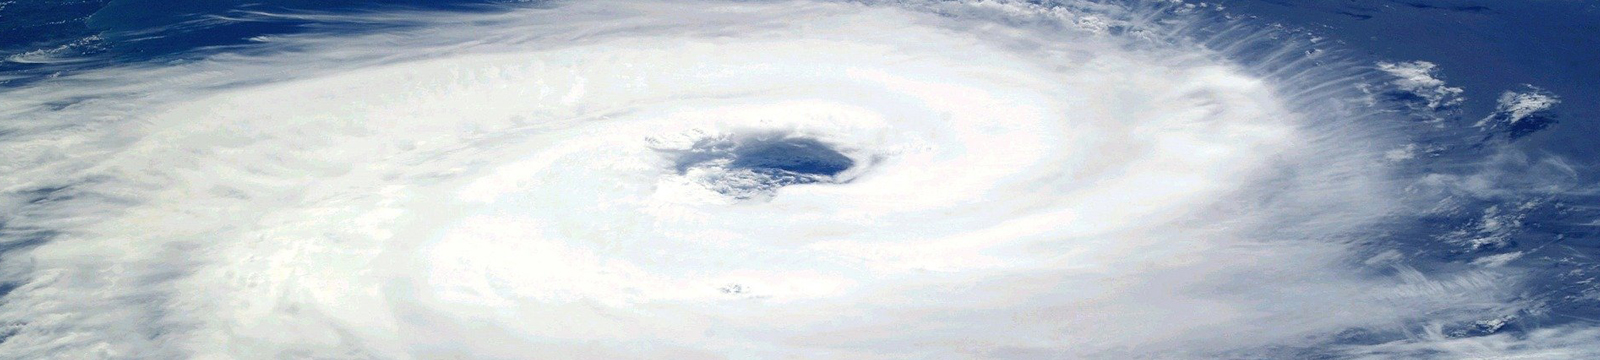 satelite image of hurricane